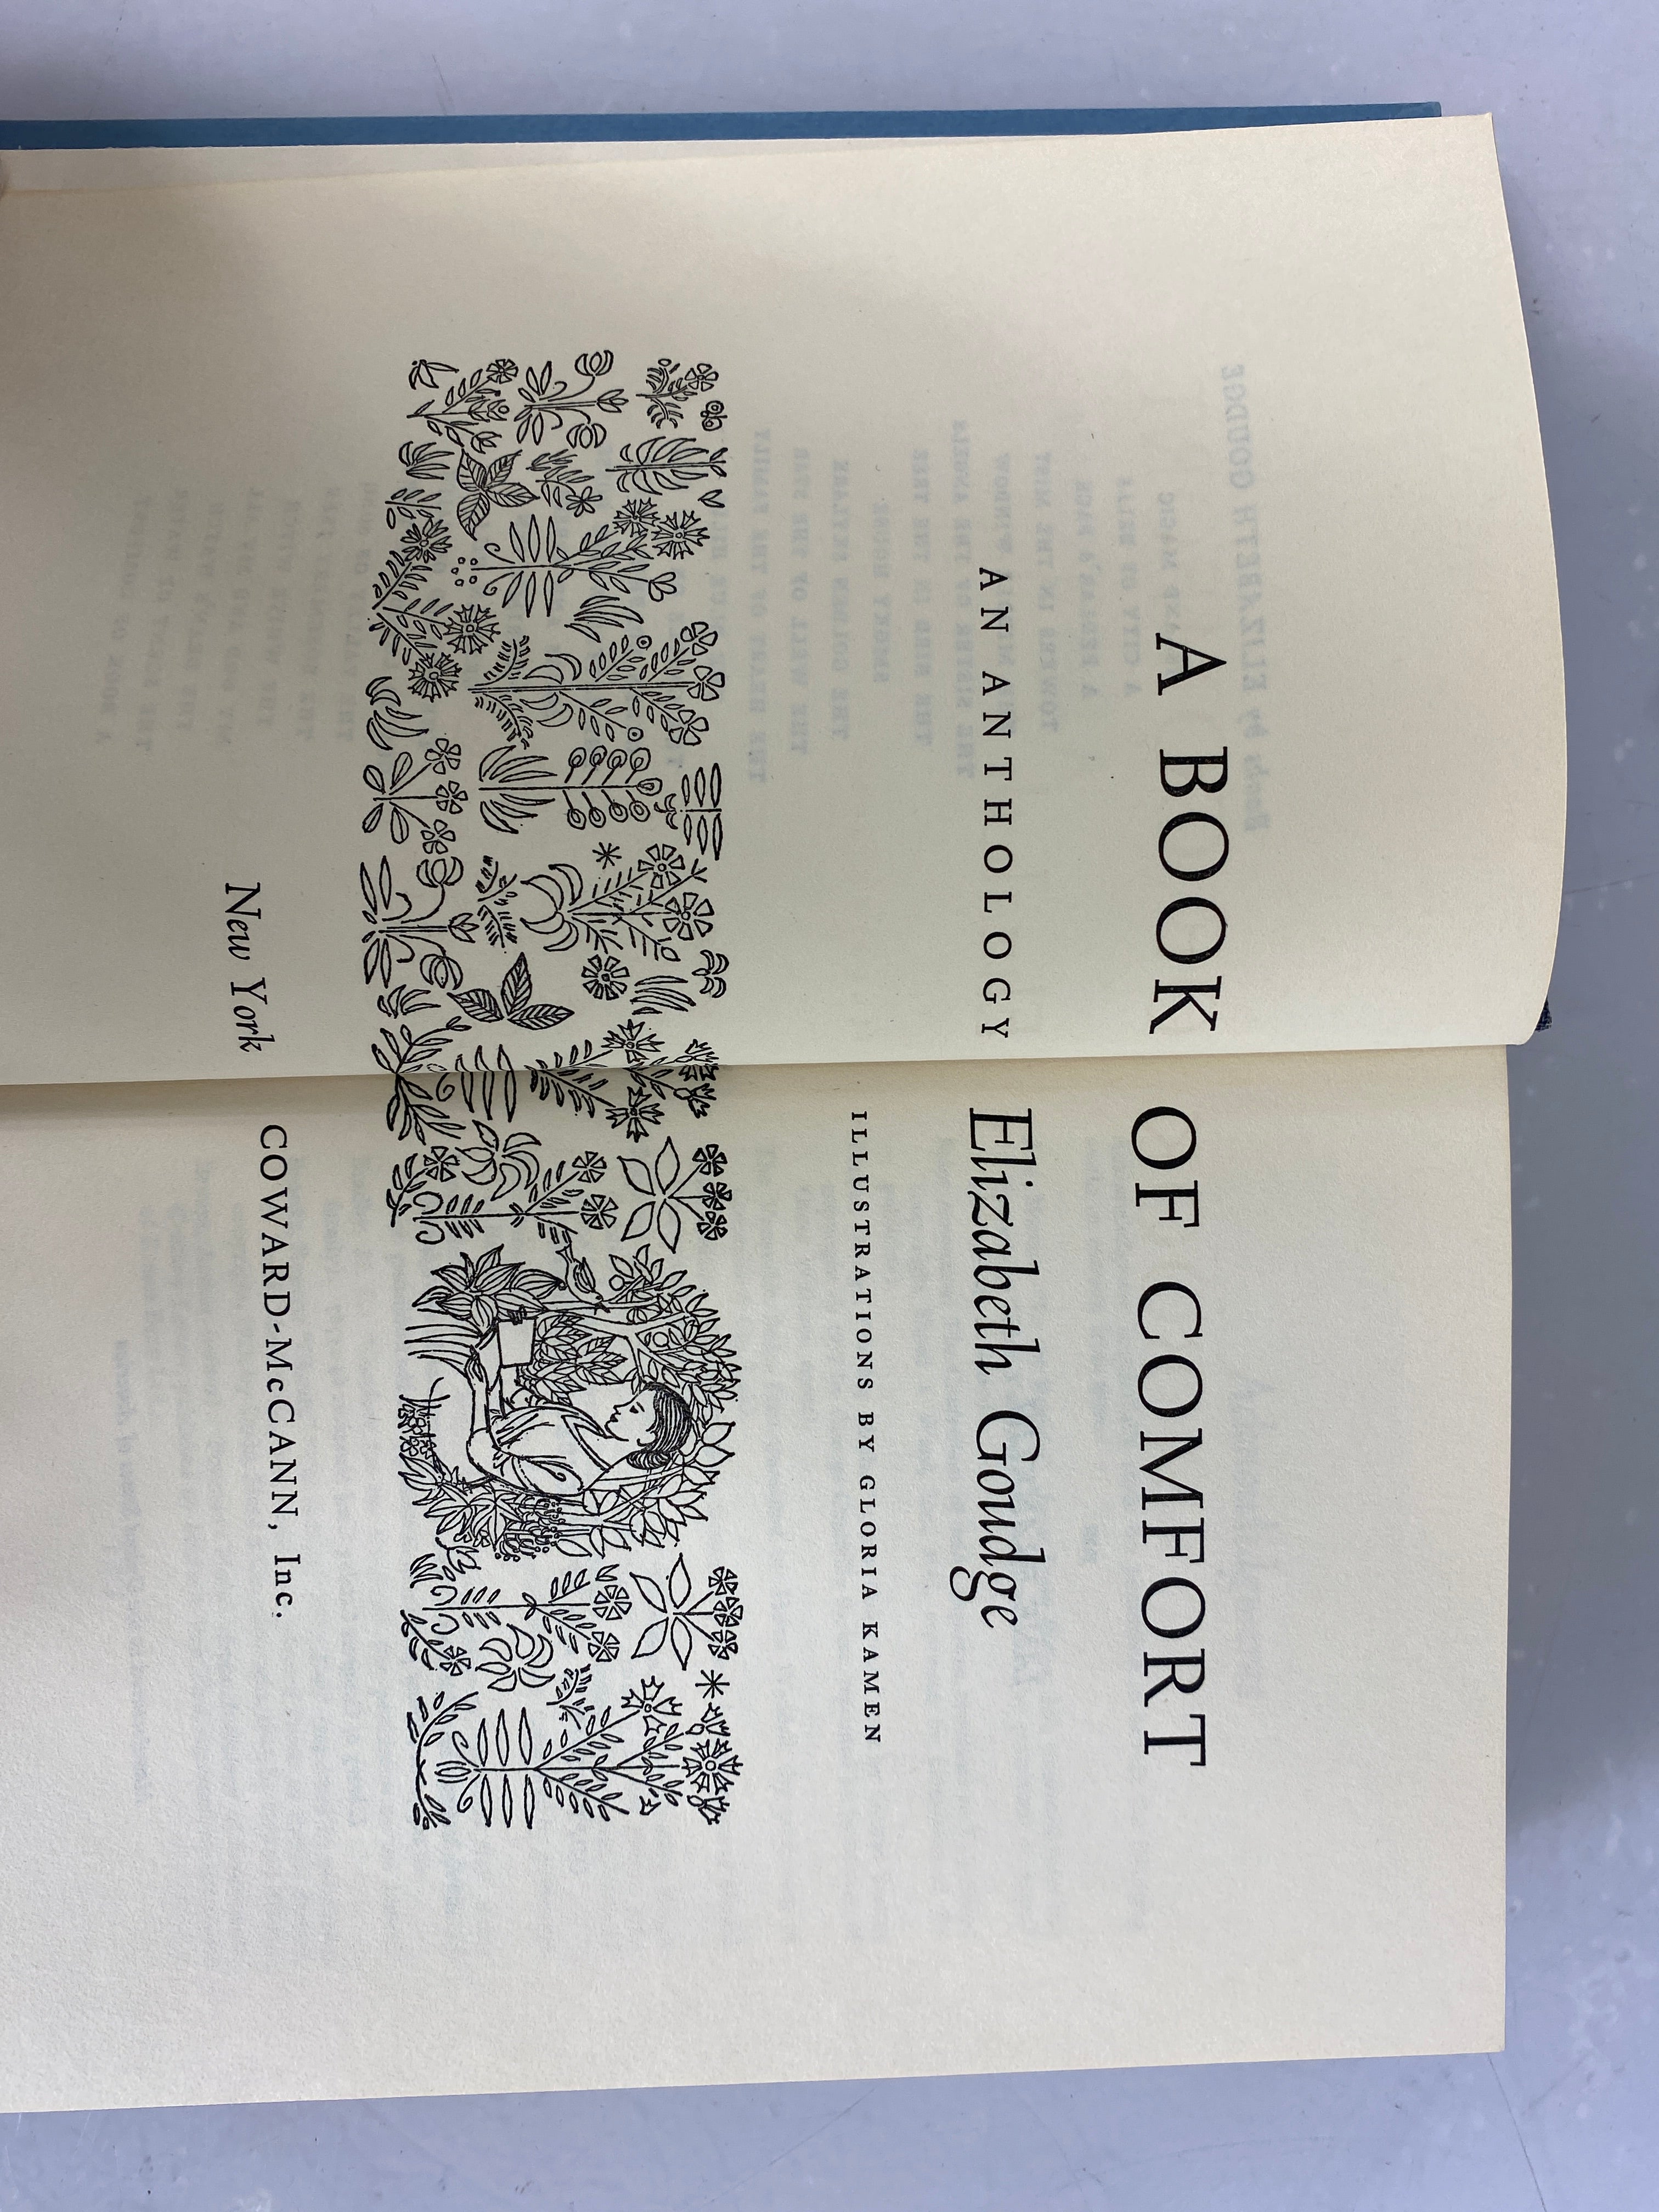 A Book of Comfort by Elizabeth Goudge 1964 HC DJ